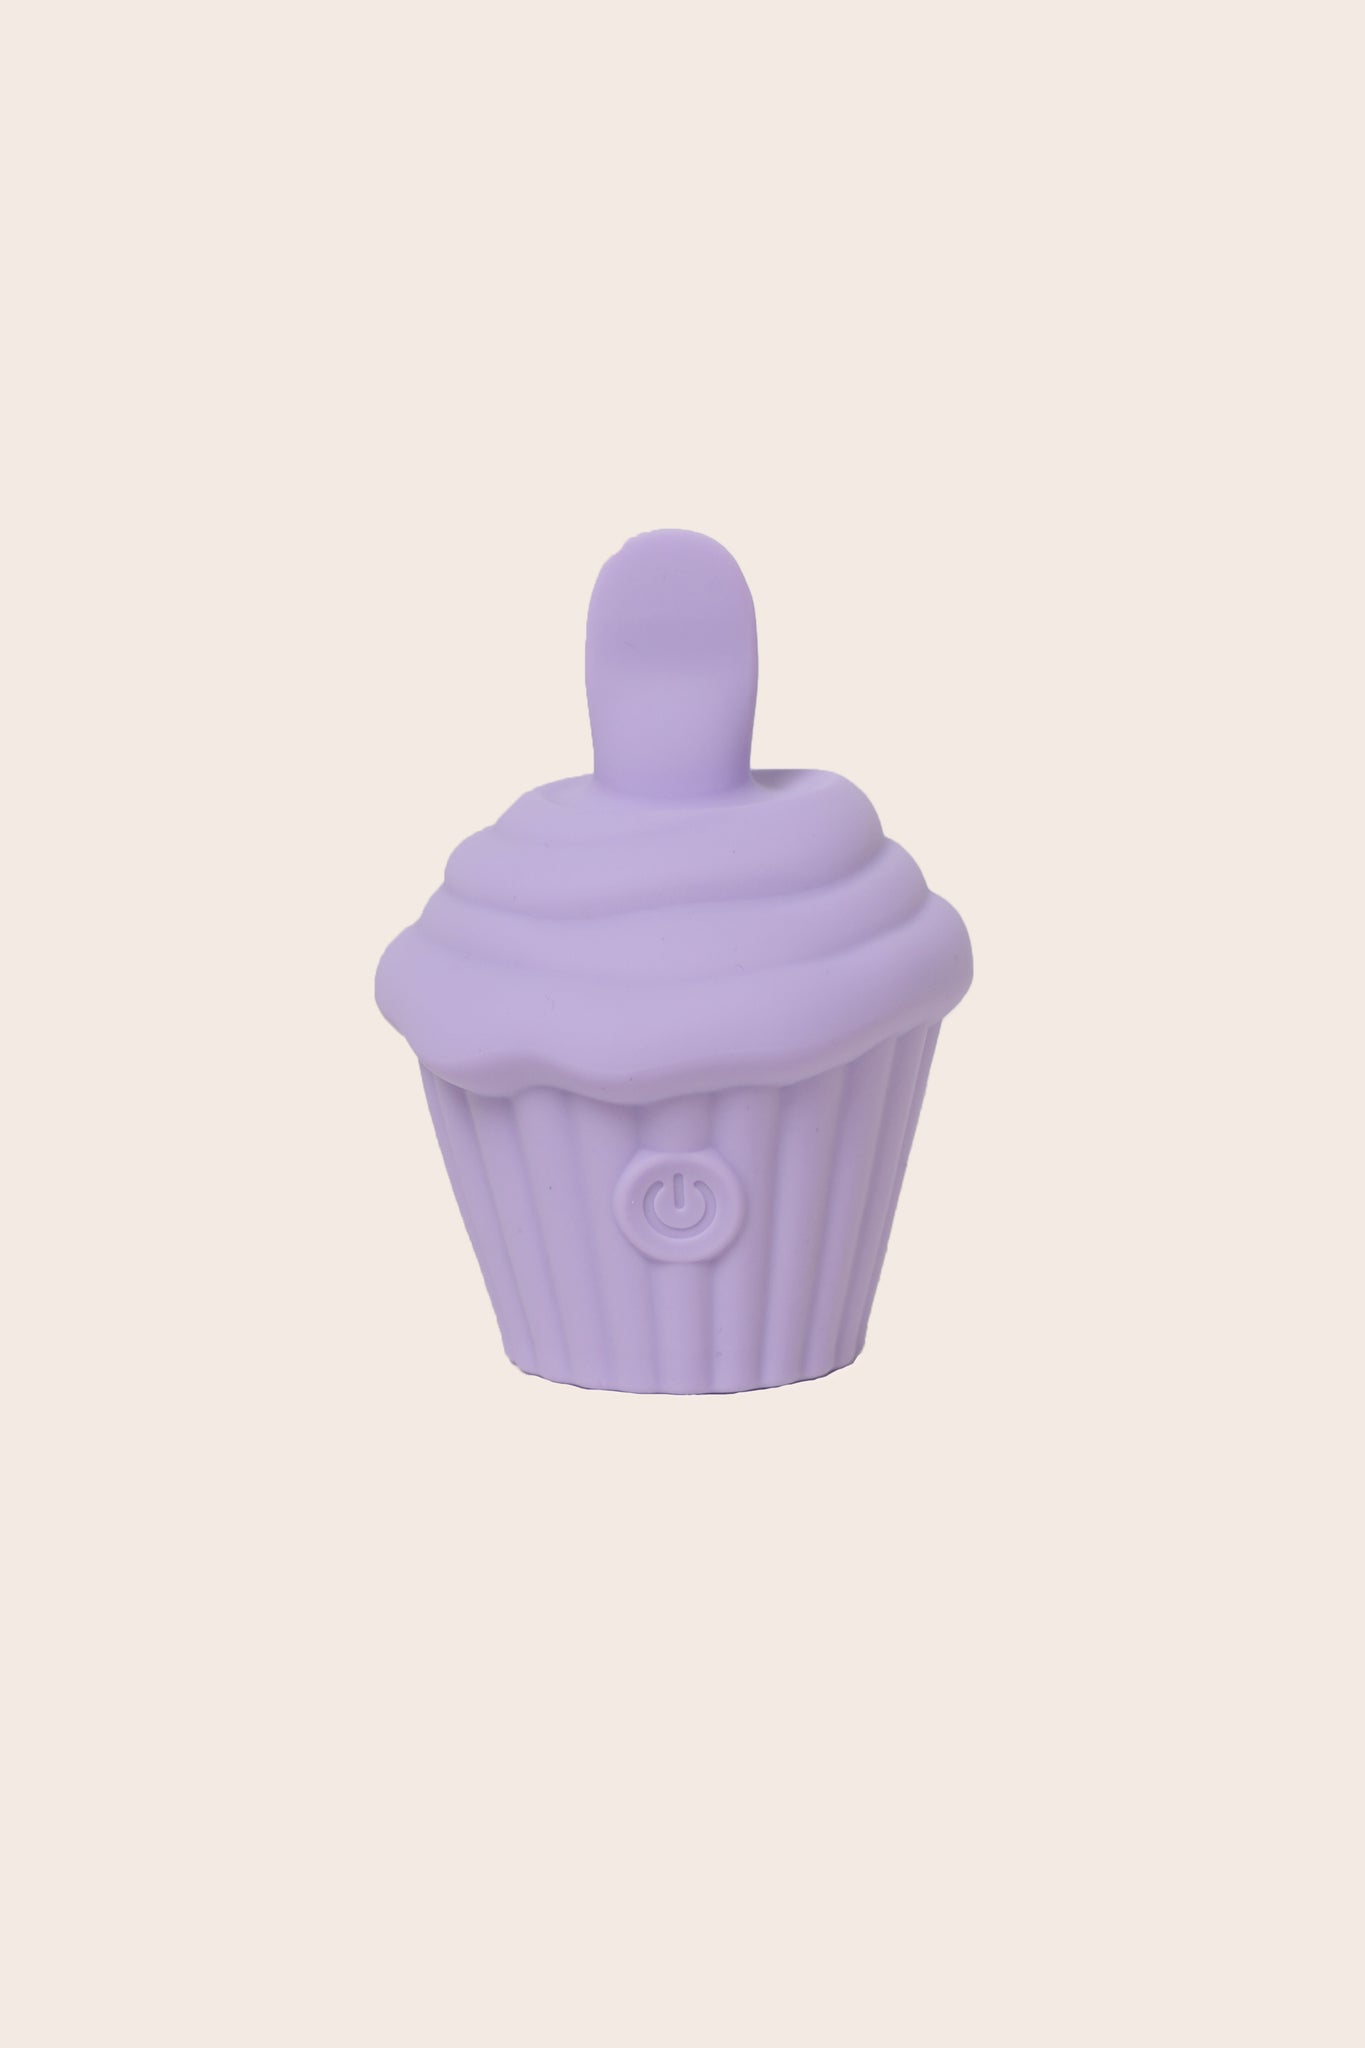 [HONEYGLAZE] Cupcake Dreams